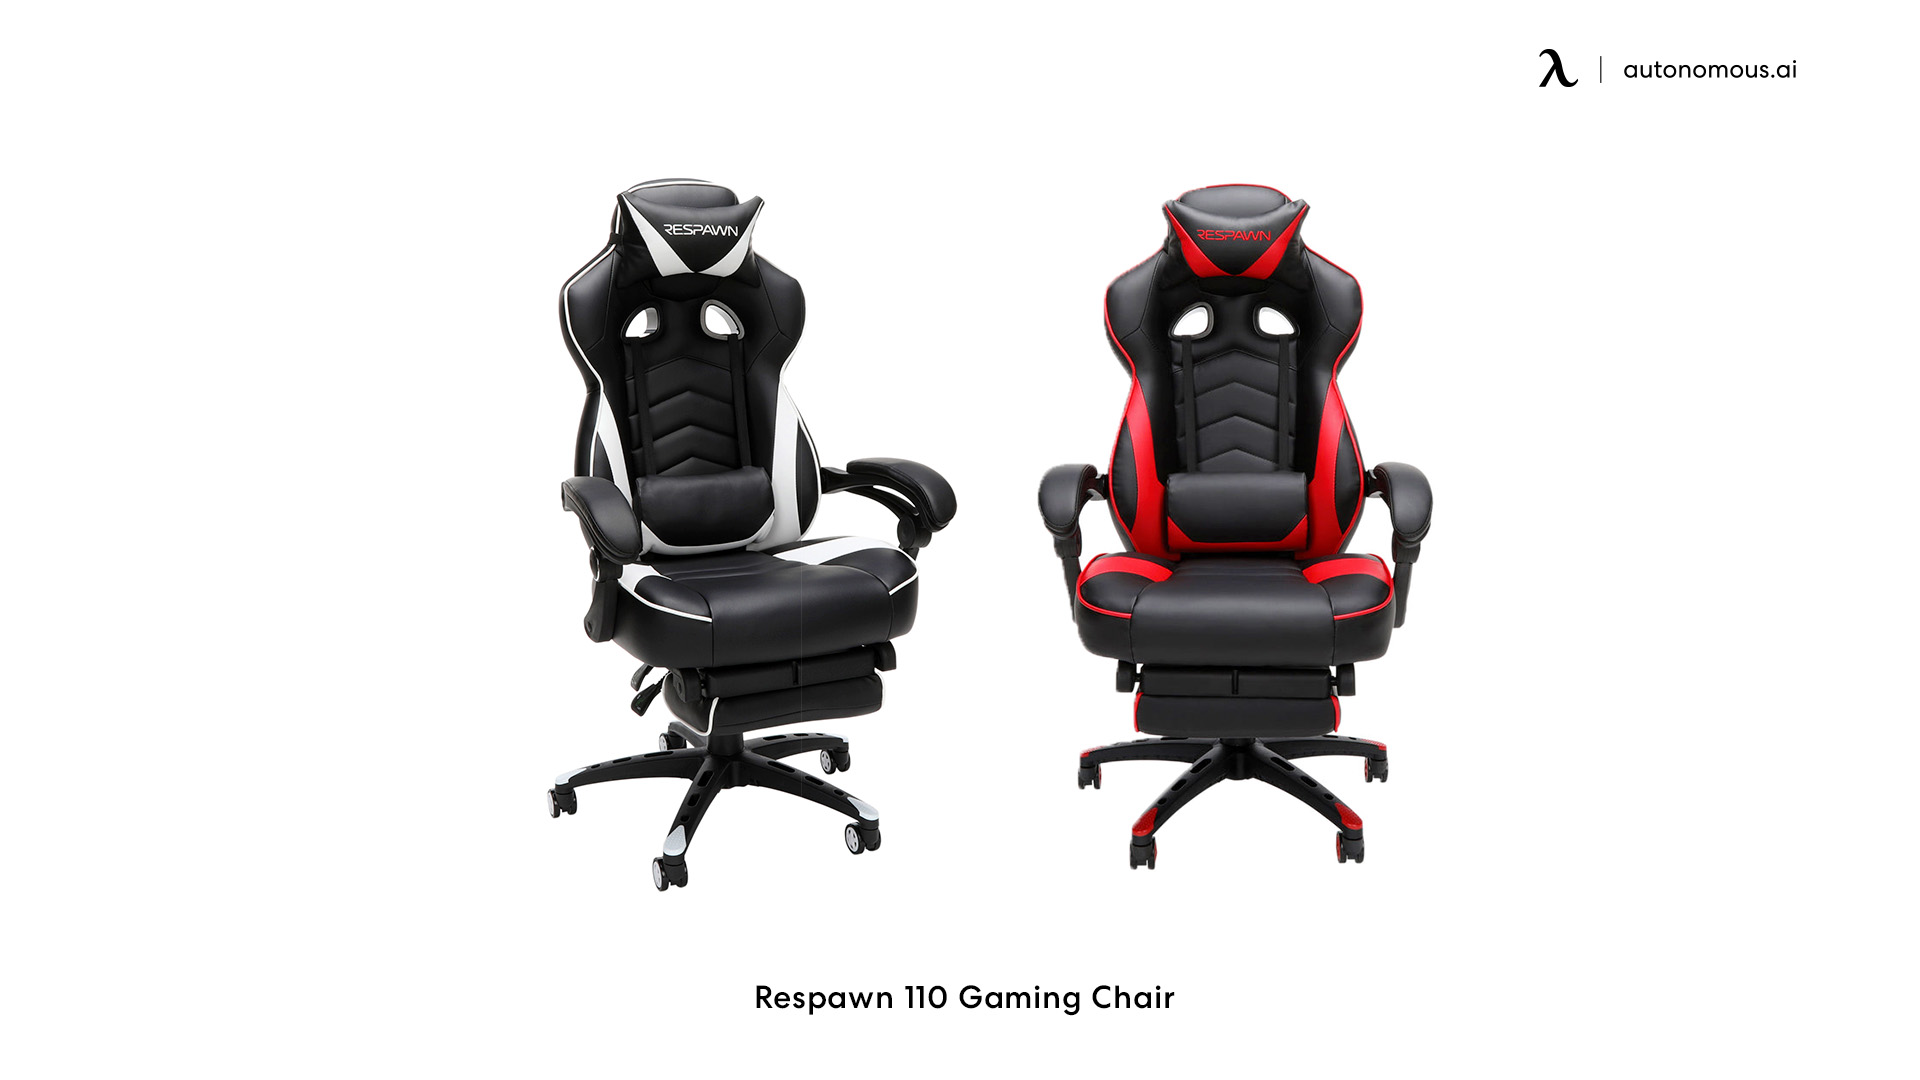 Respawn 110 high back gaming chair